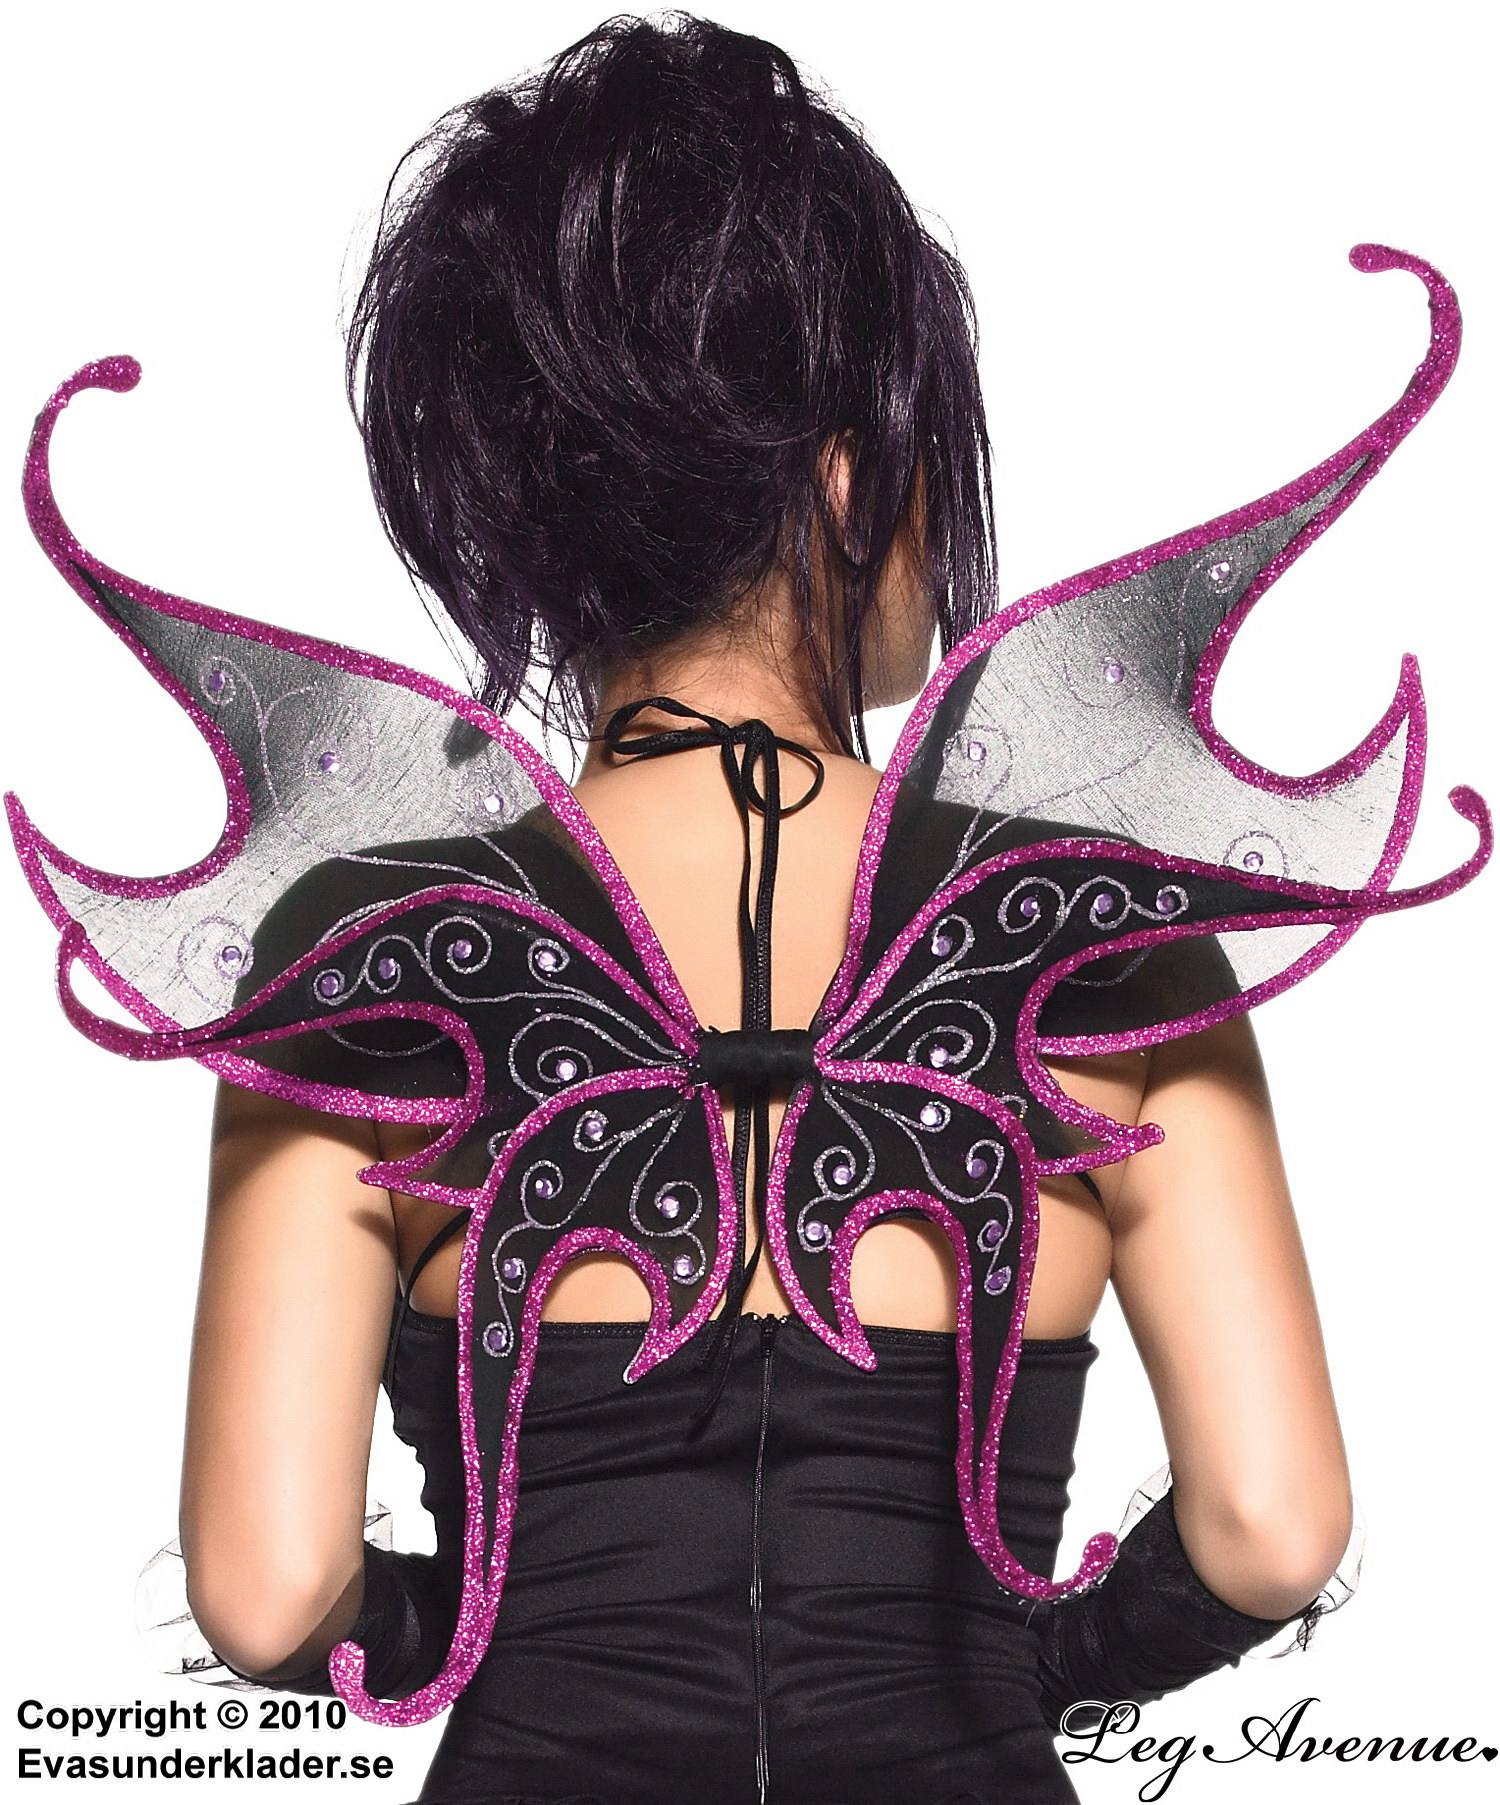 Butterfly (woman), costume wings, sheer mesh, glitter, scattered rhinestones